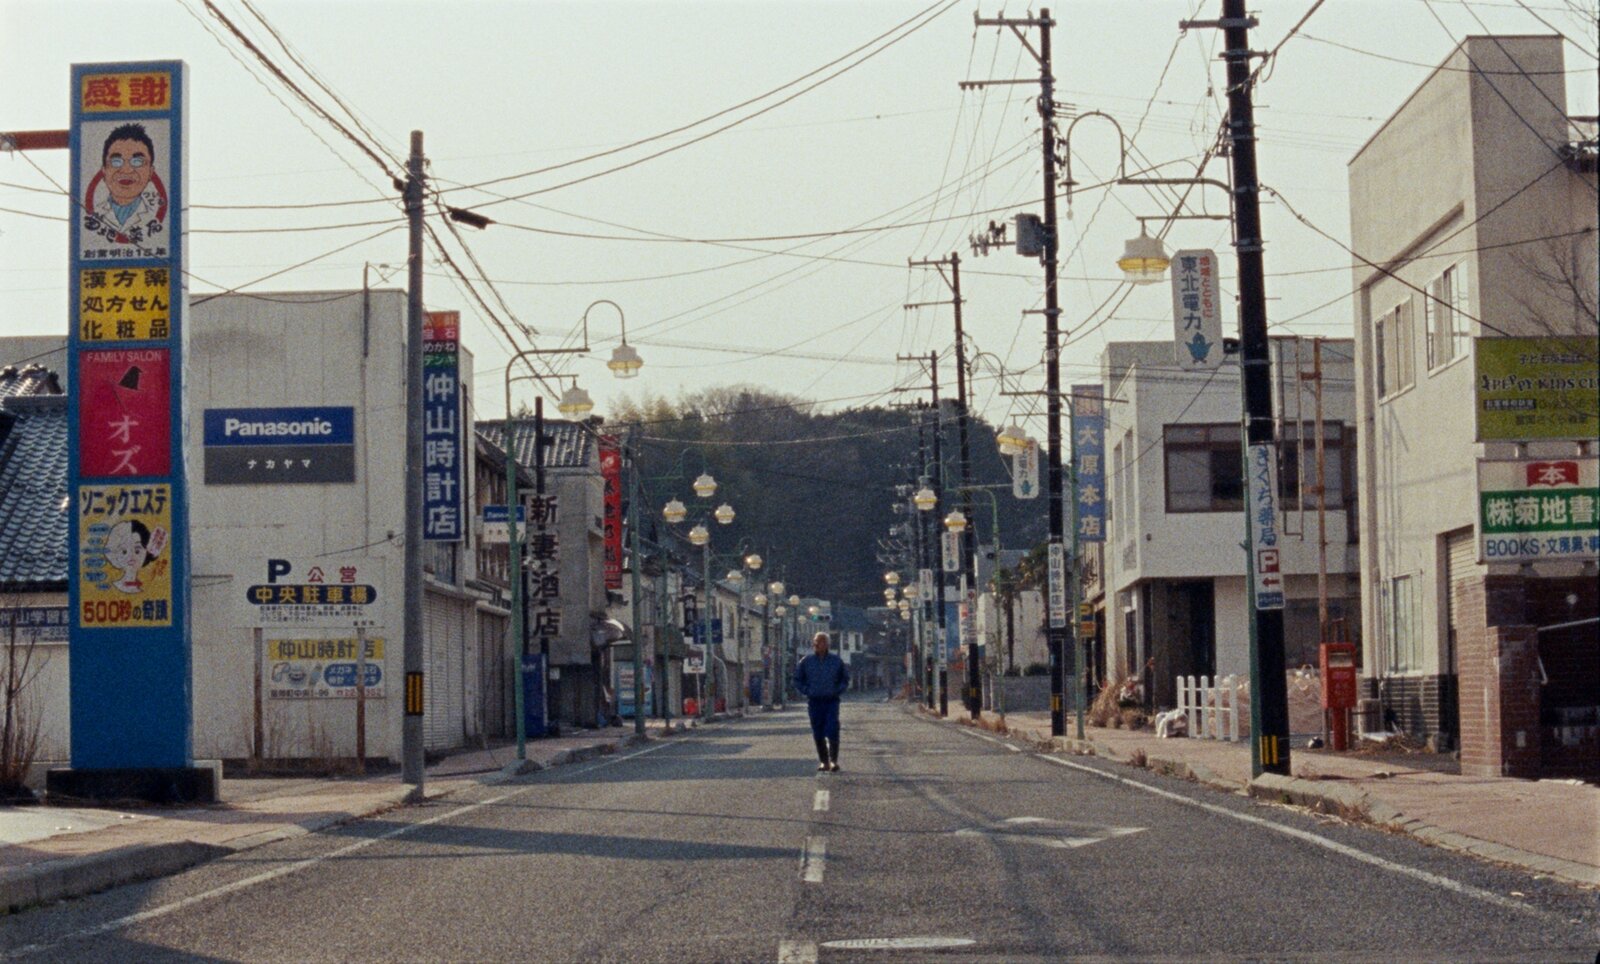 Bilder - Half-life in Fukushima - Cineman